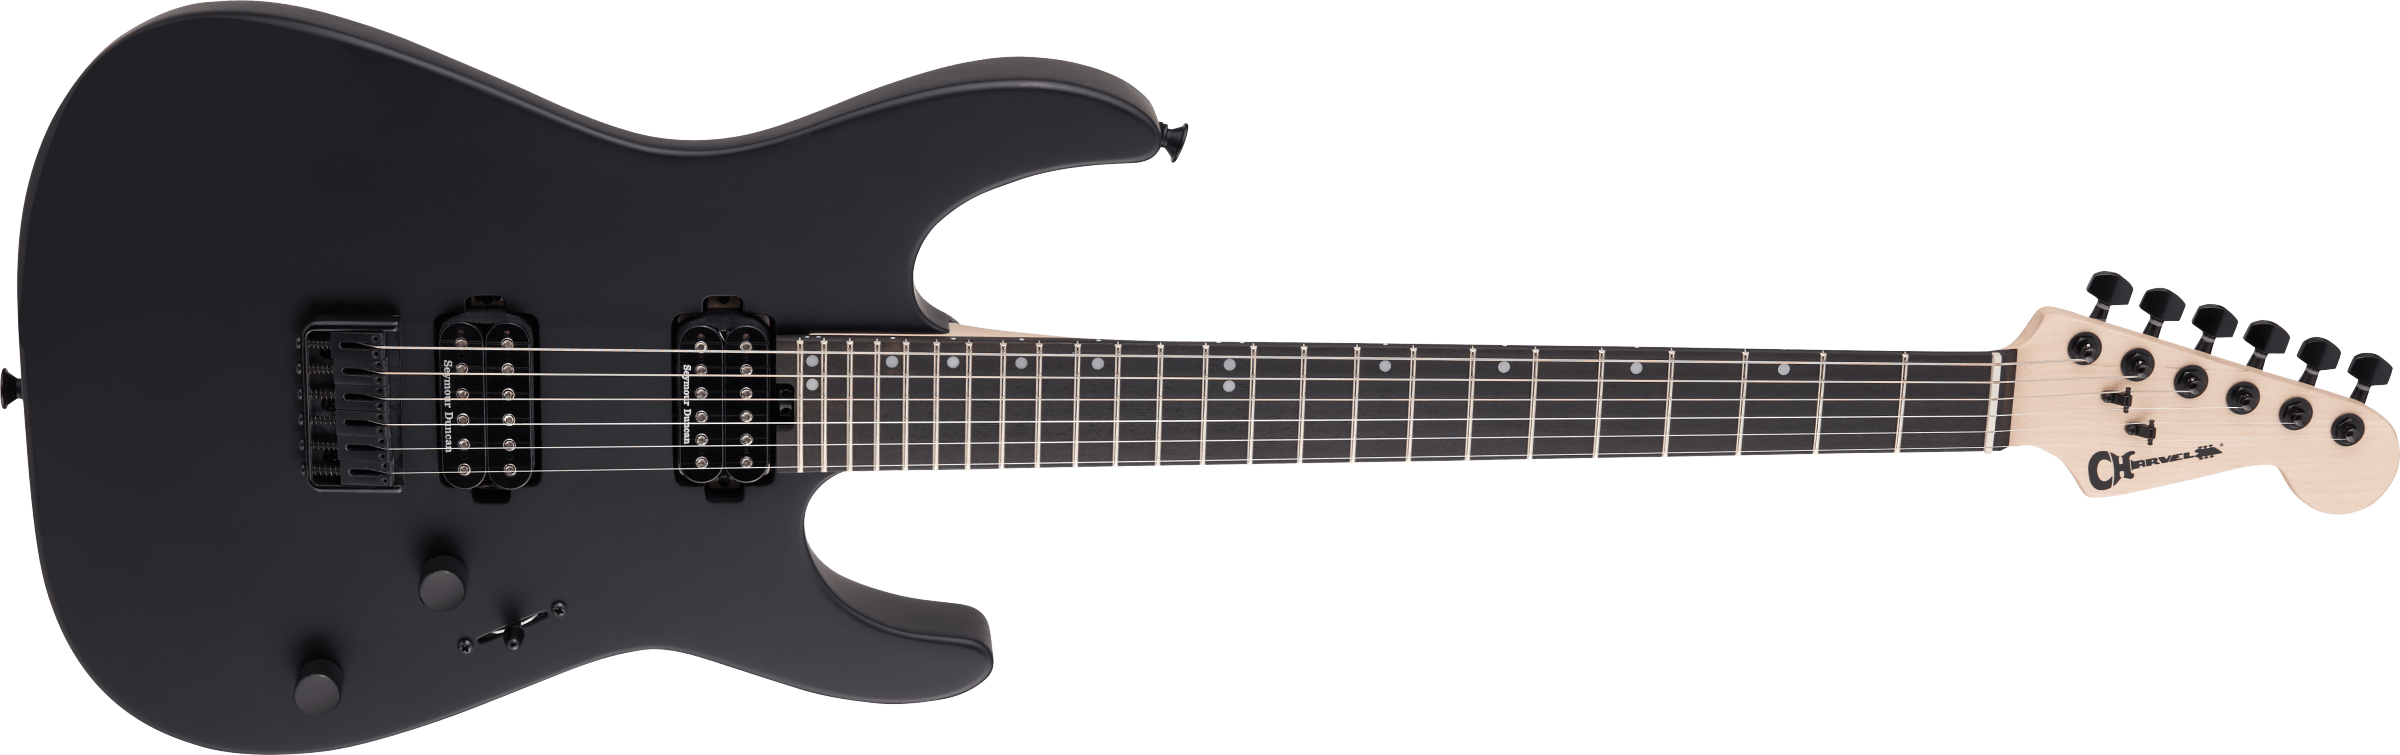 Charvel Dinky Dk24 Hh Ht E Pro-mod 2h Seymour Duncan Eb - Satin Black - Str shape electric guitar - Variation 2